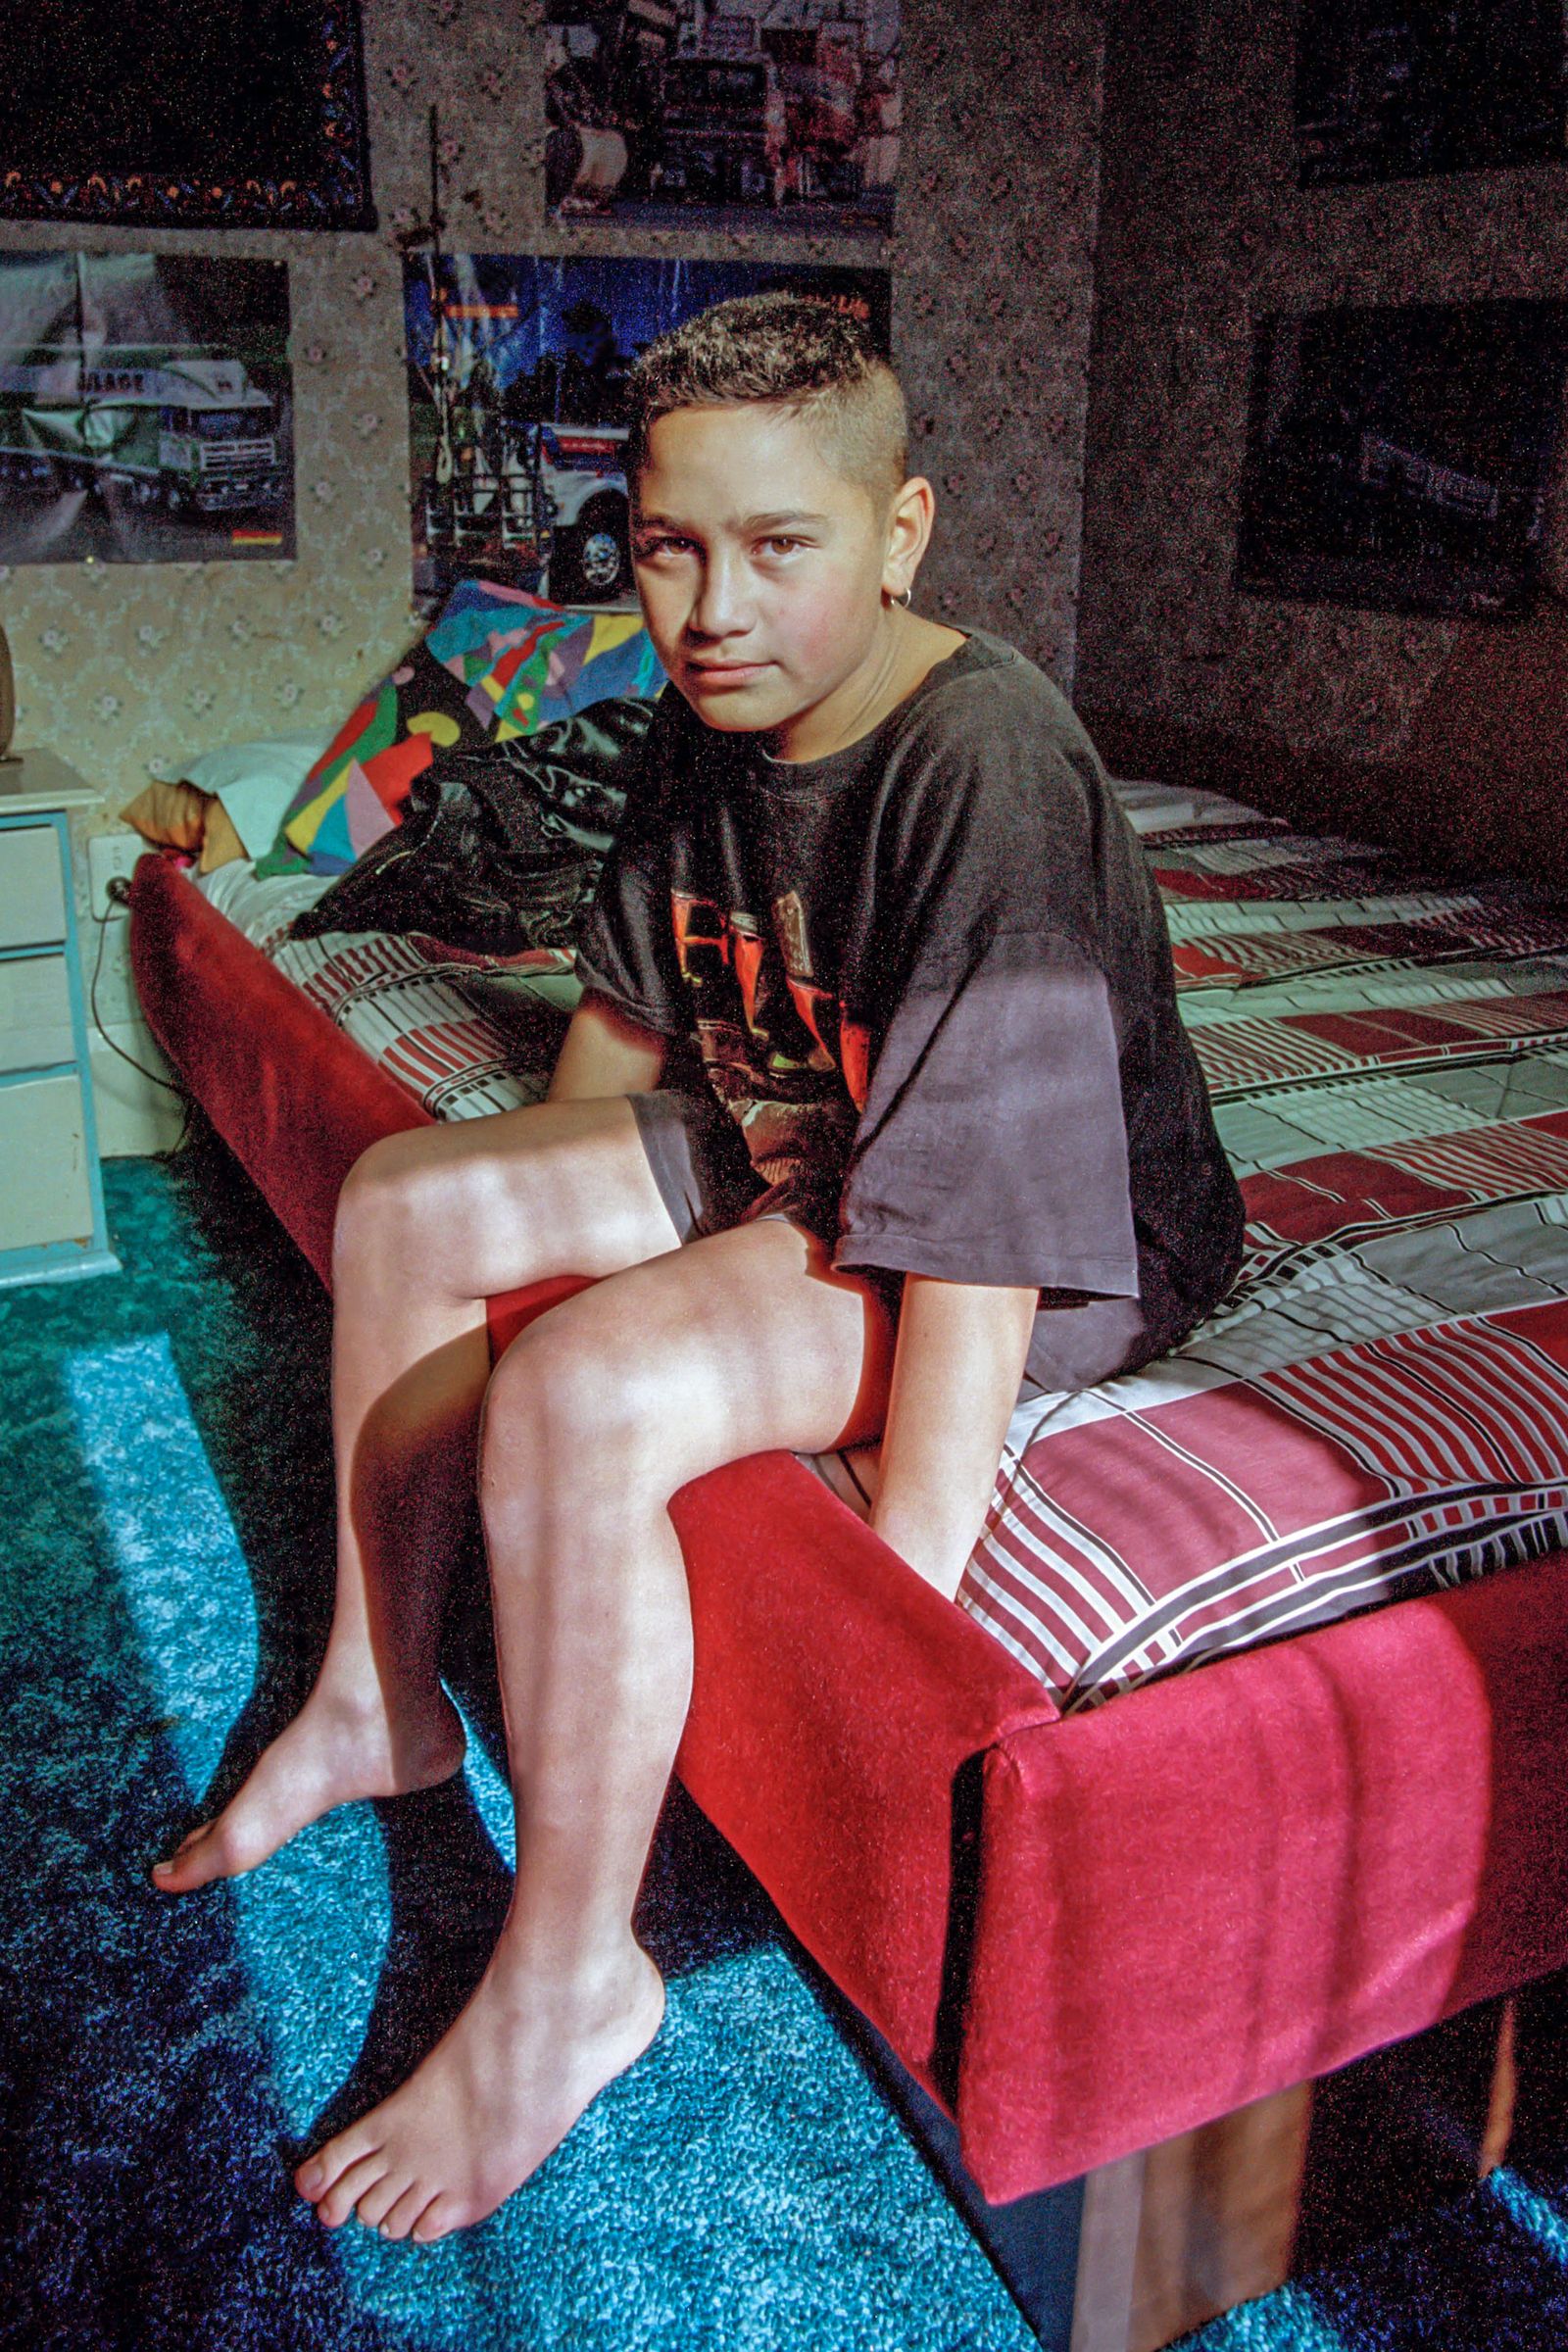 © Martin Toft - Kapi. Kapi Topine in his room at his home in Taumarunui (1996).